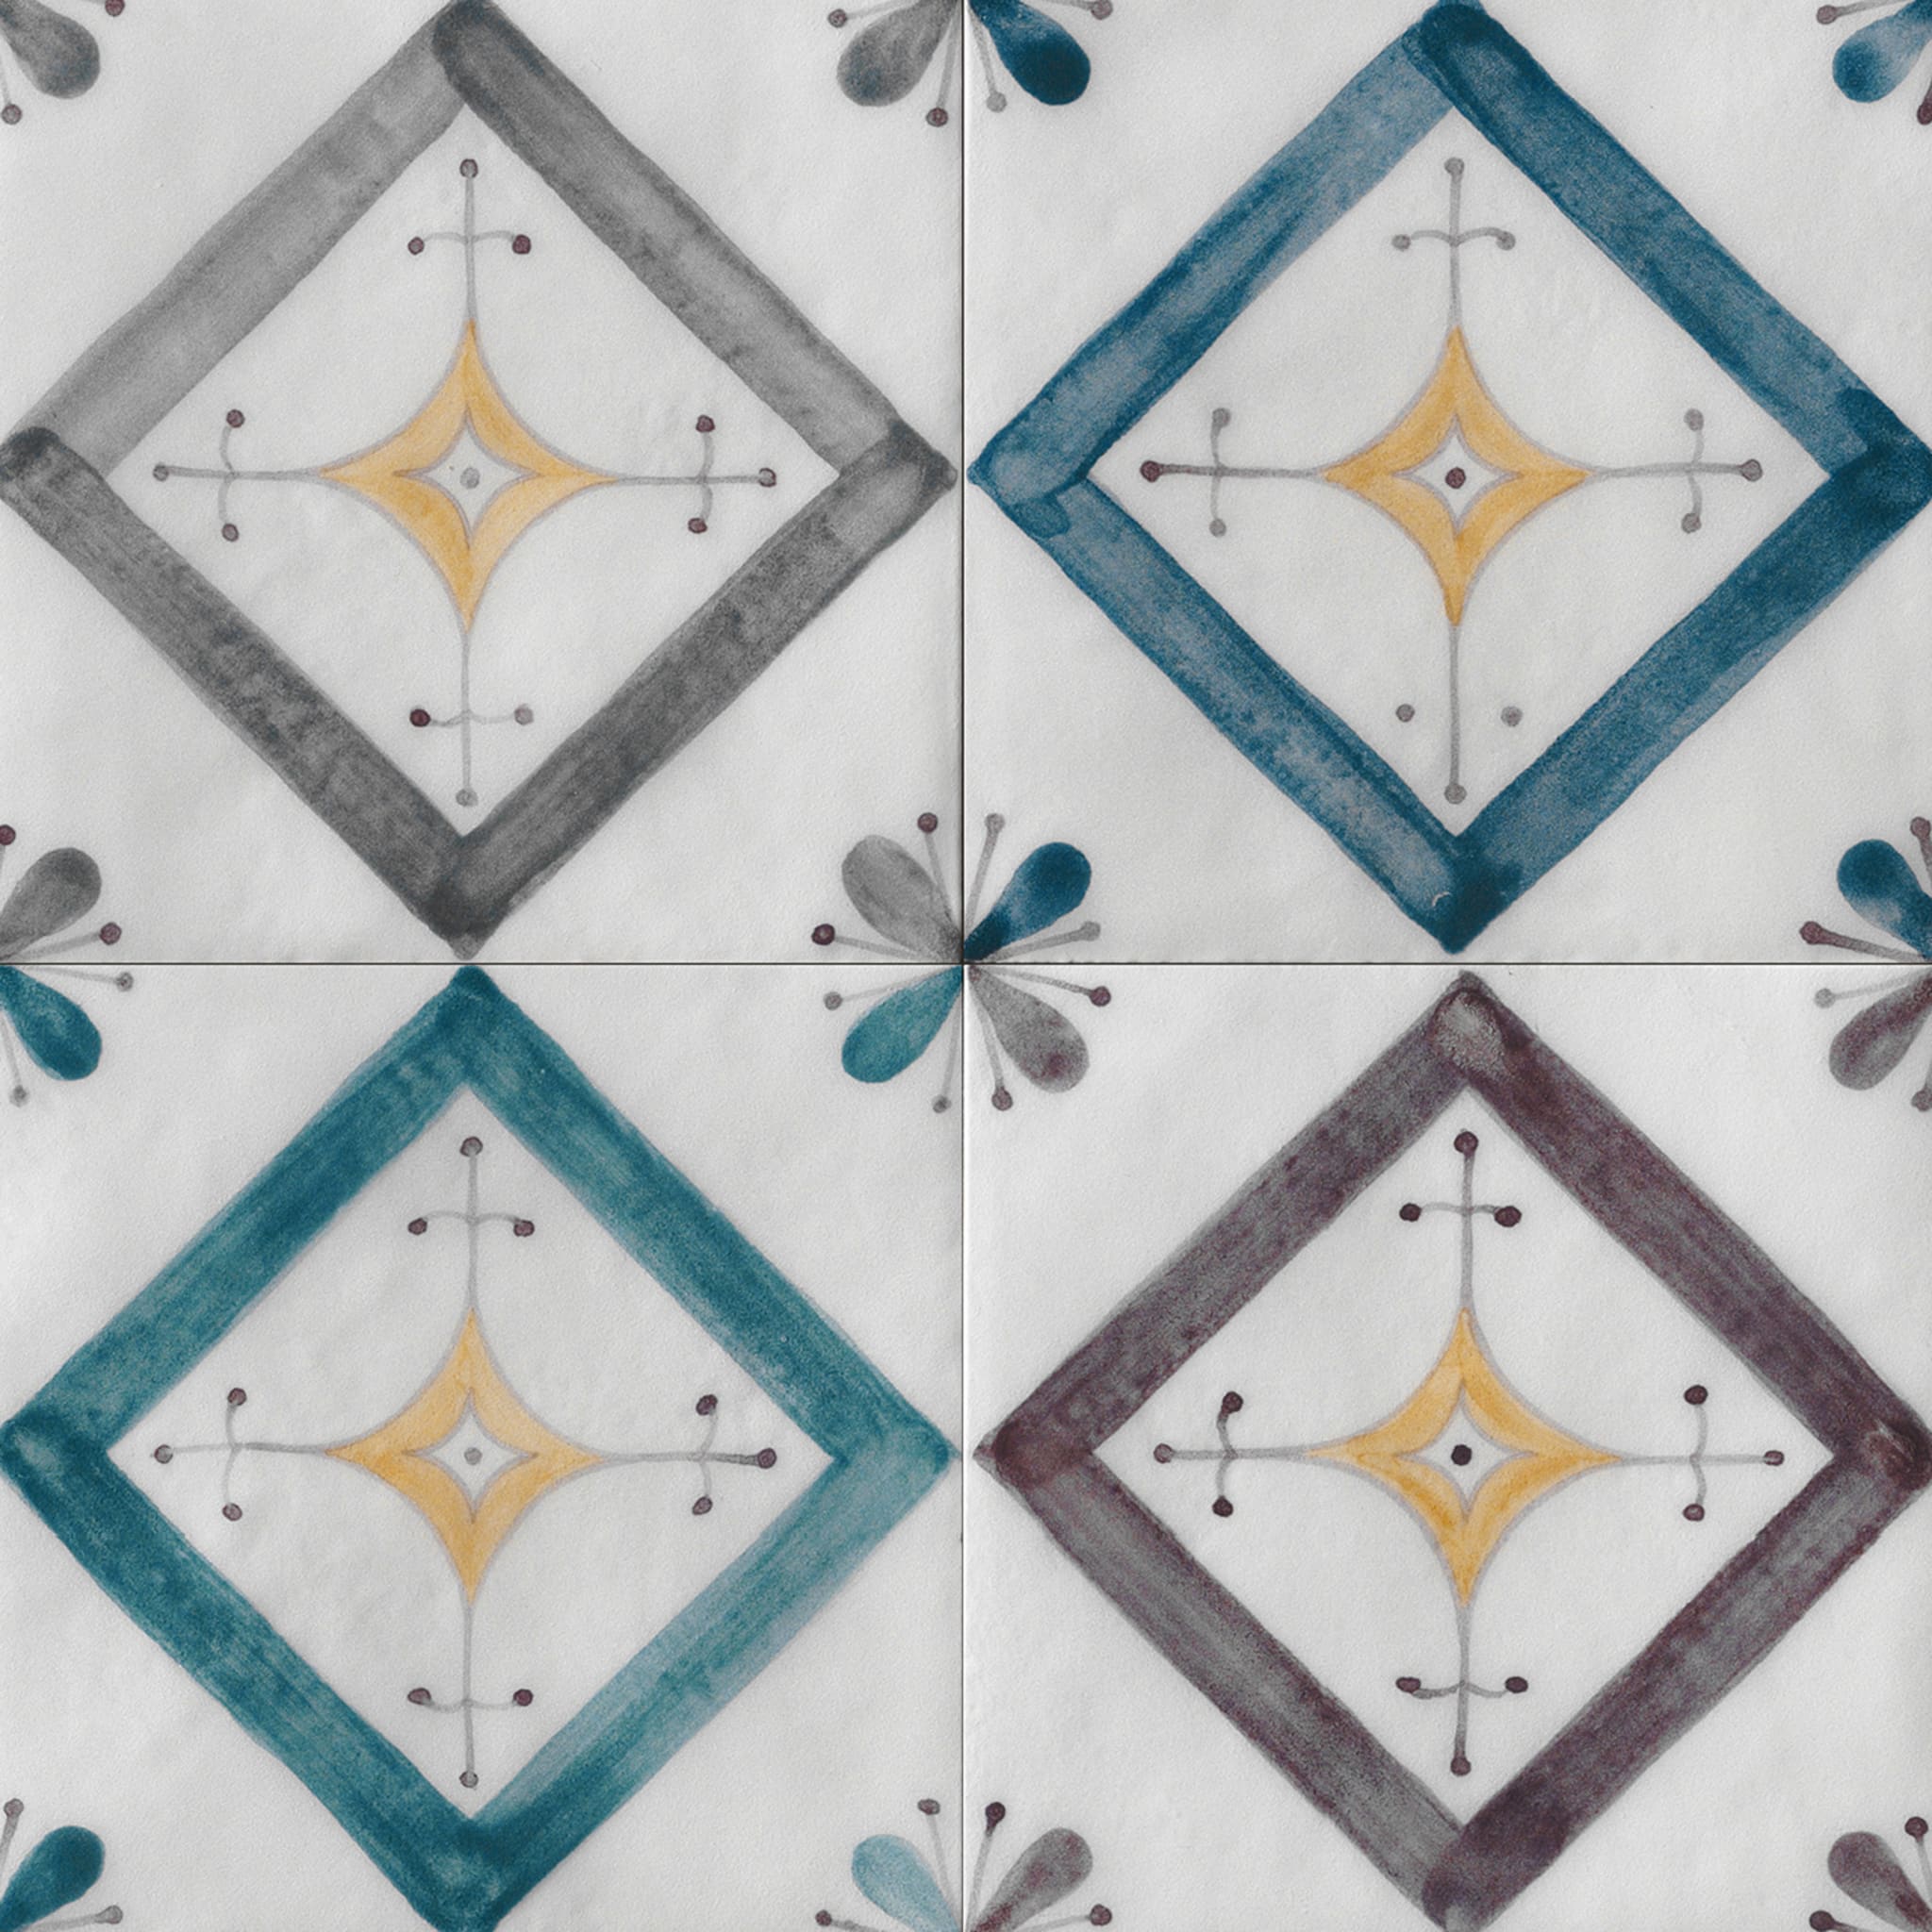 Ot Isuledda Oceano Blue Set of 24 Square Tiles - Alternative view 5